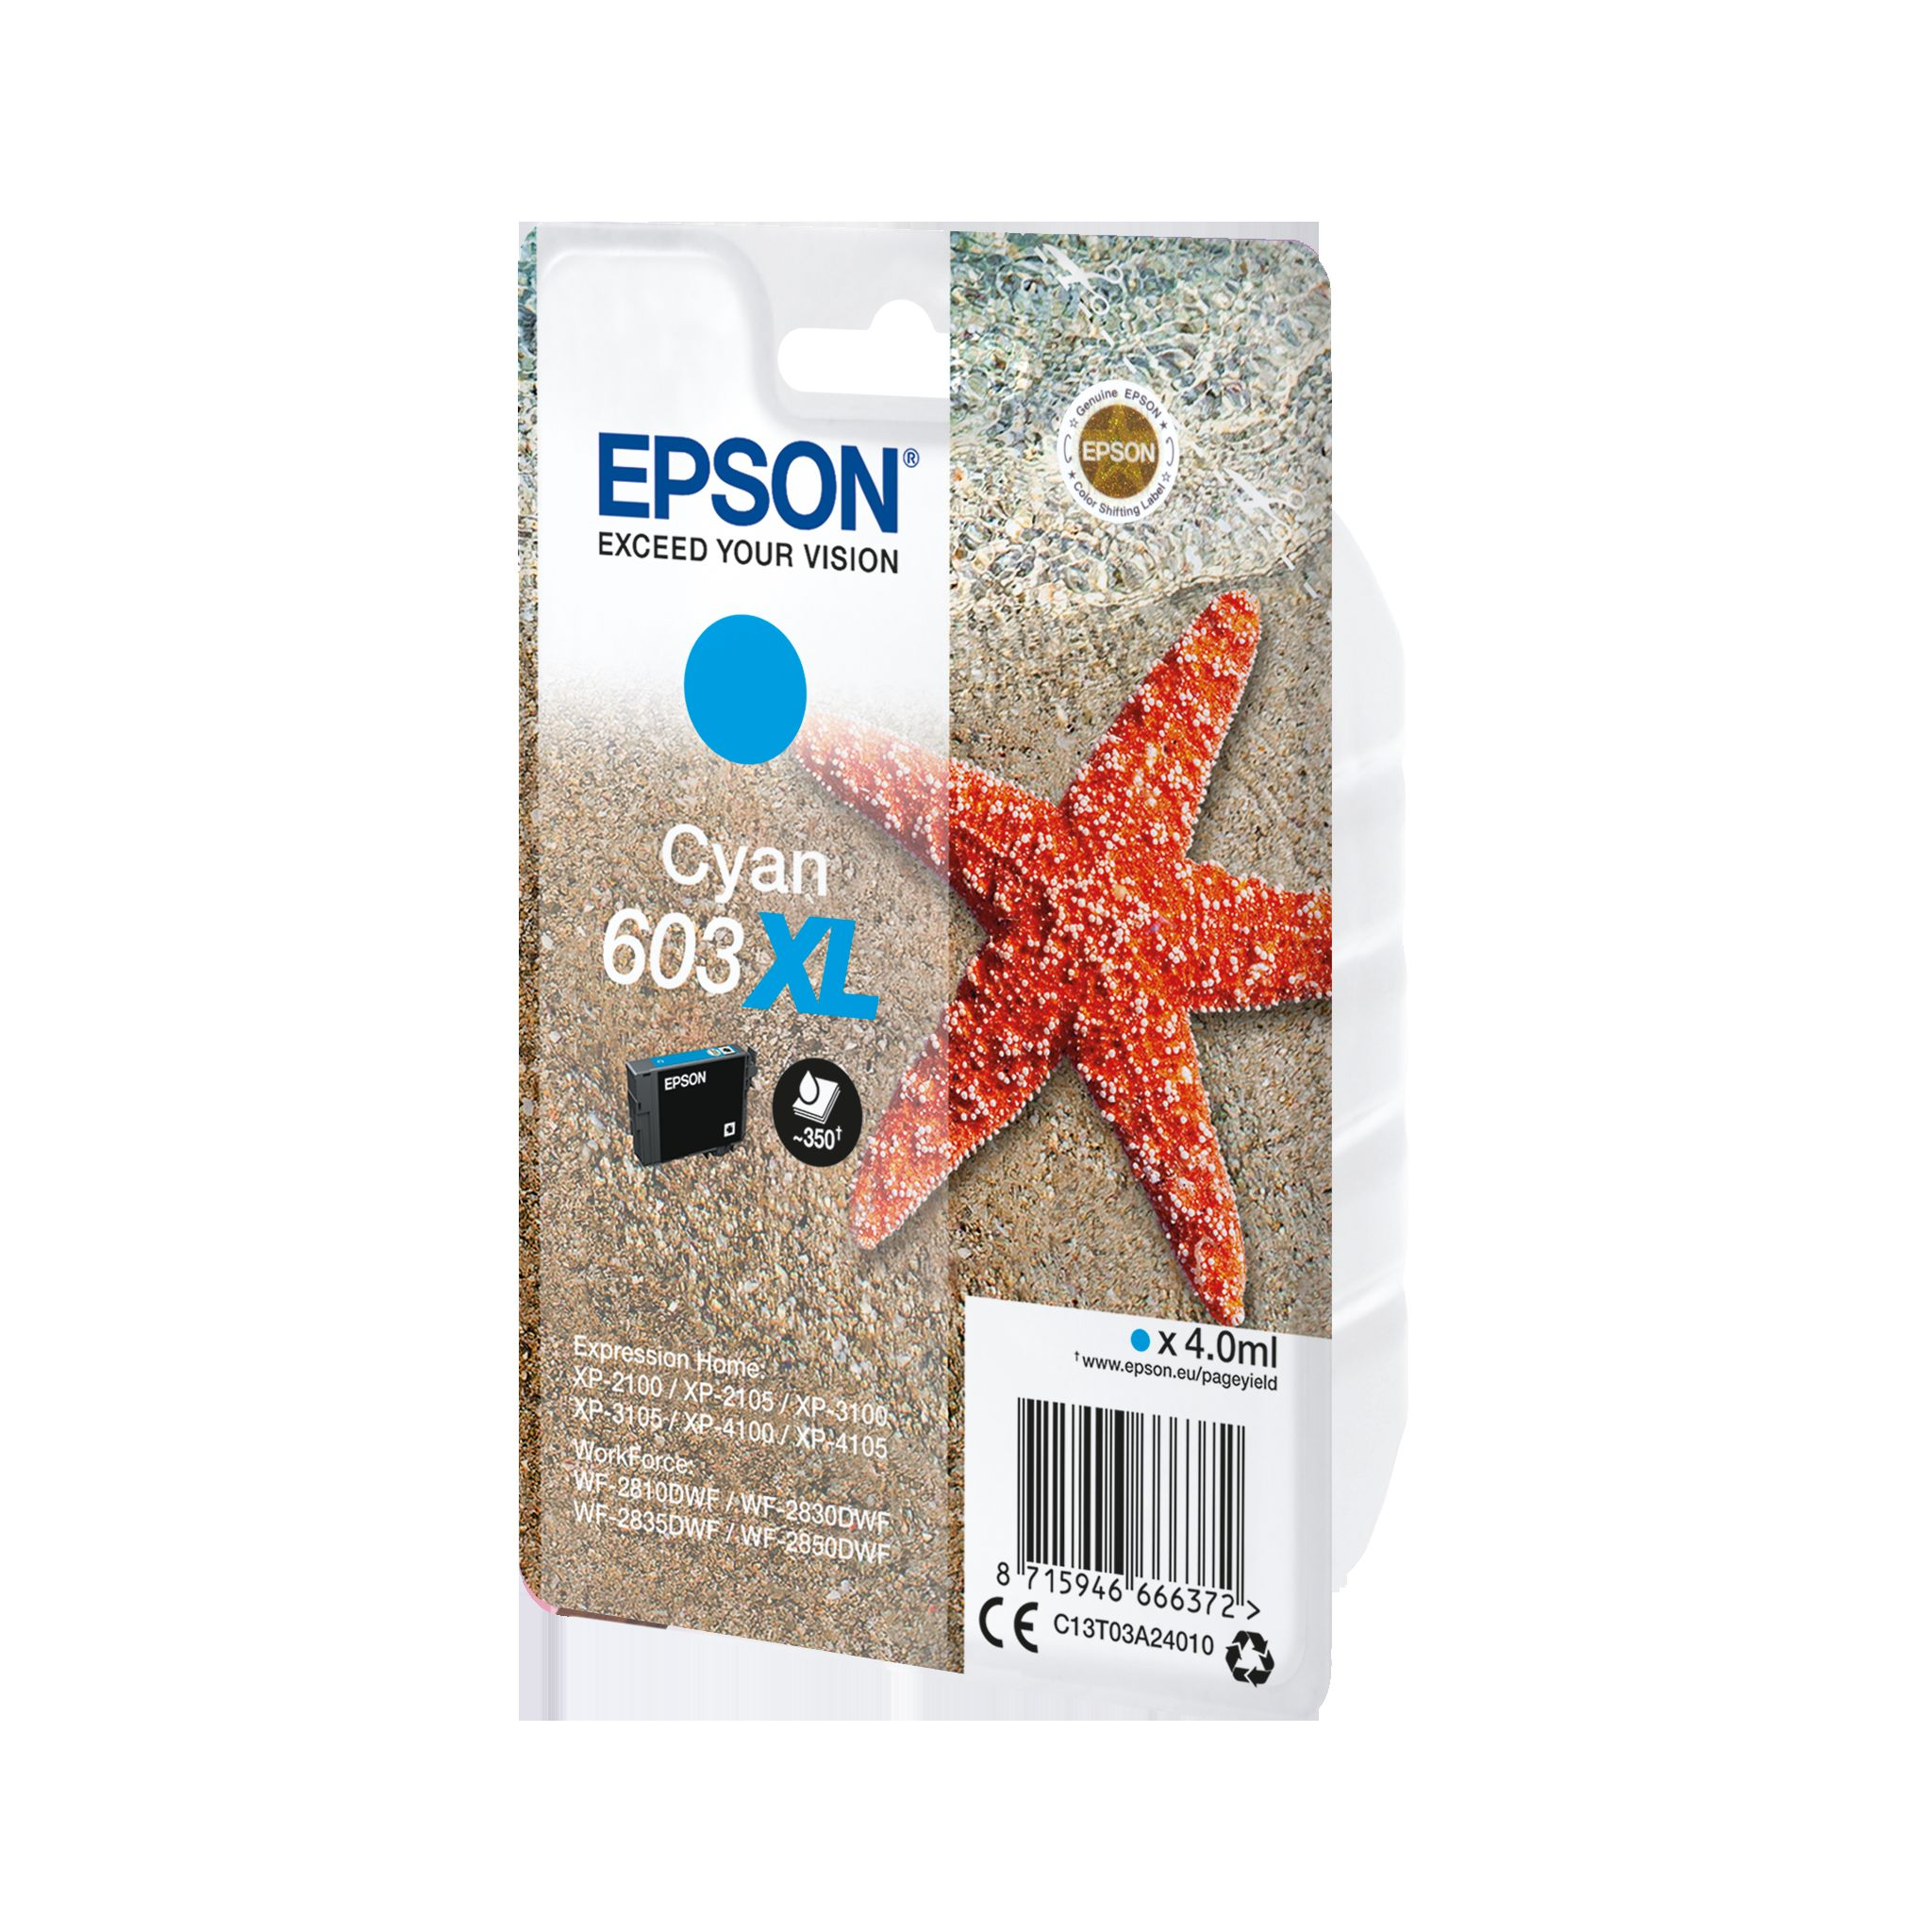 EPSON (C13T03A240) Tinte cyan 603XL